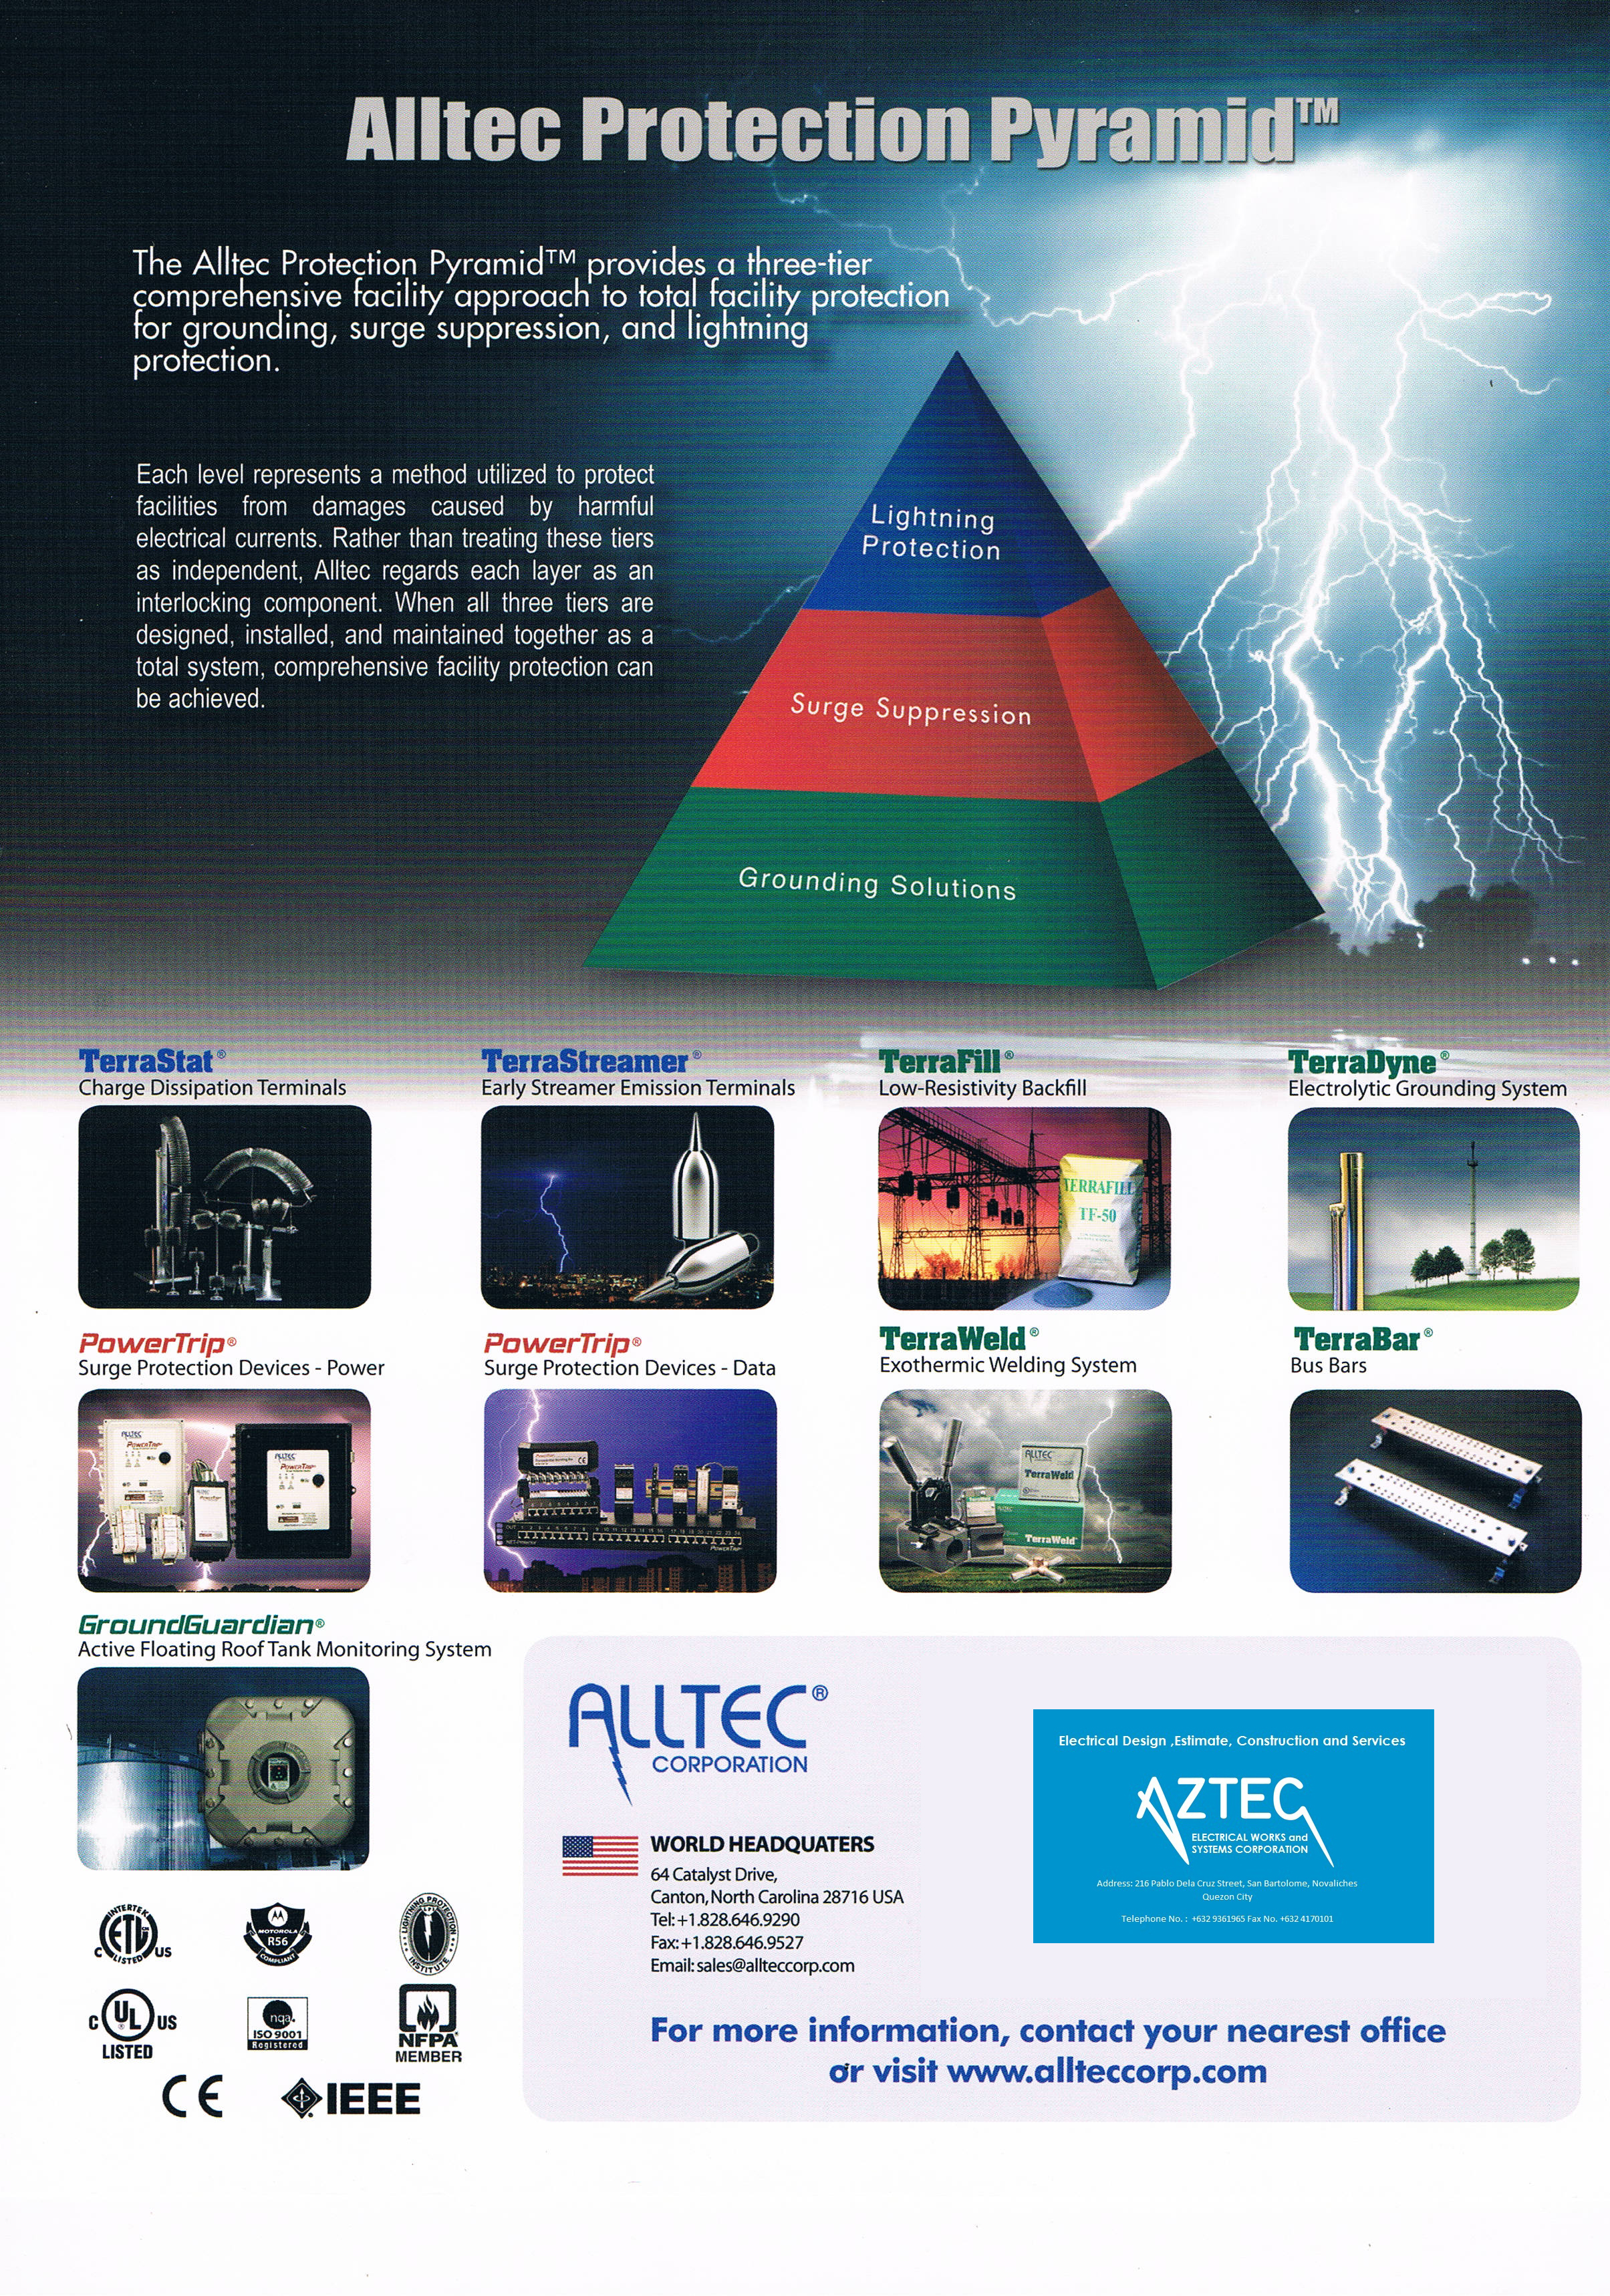 lightningprotectionsurgesuppressiongroundingsystem.jpg